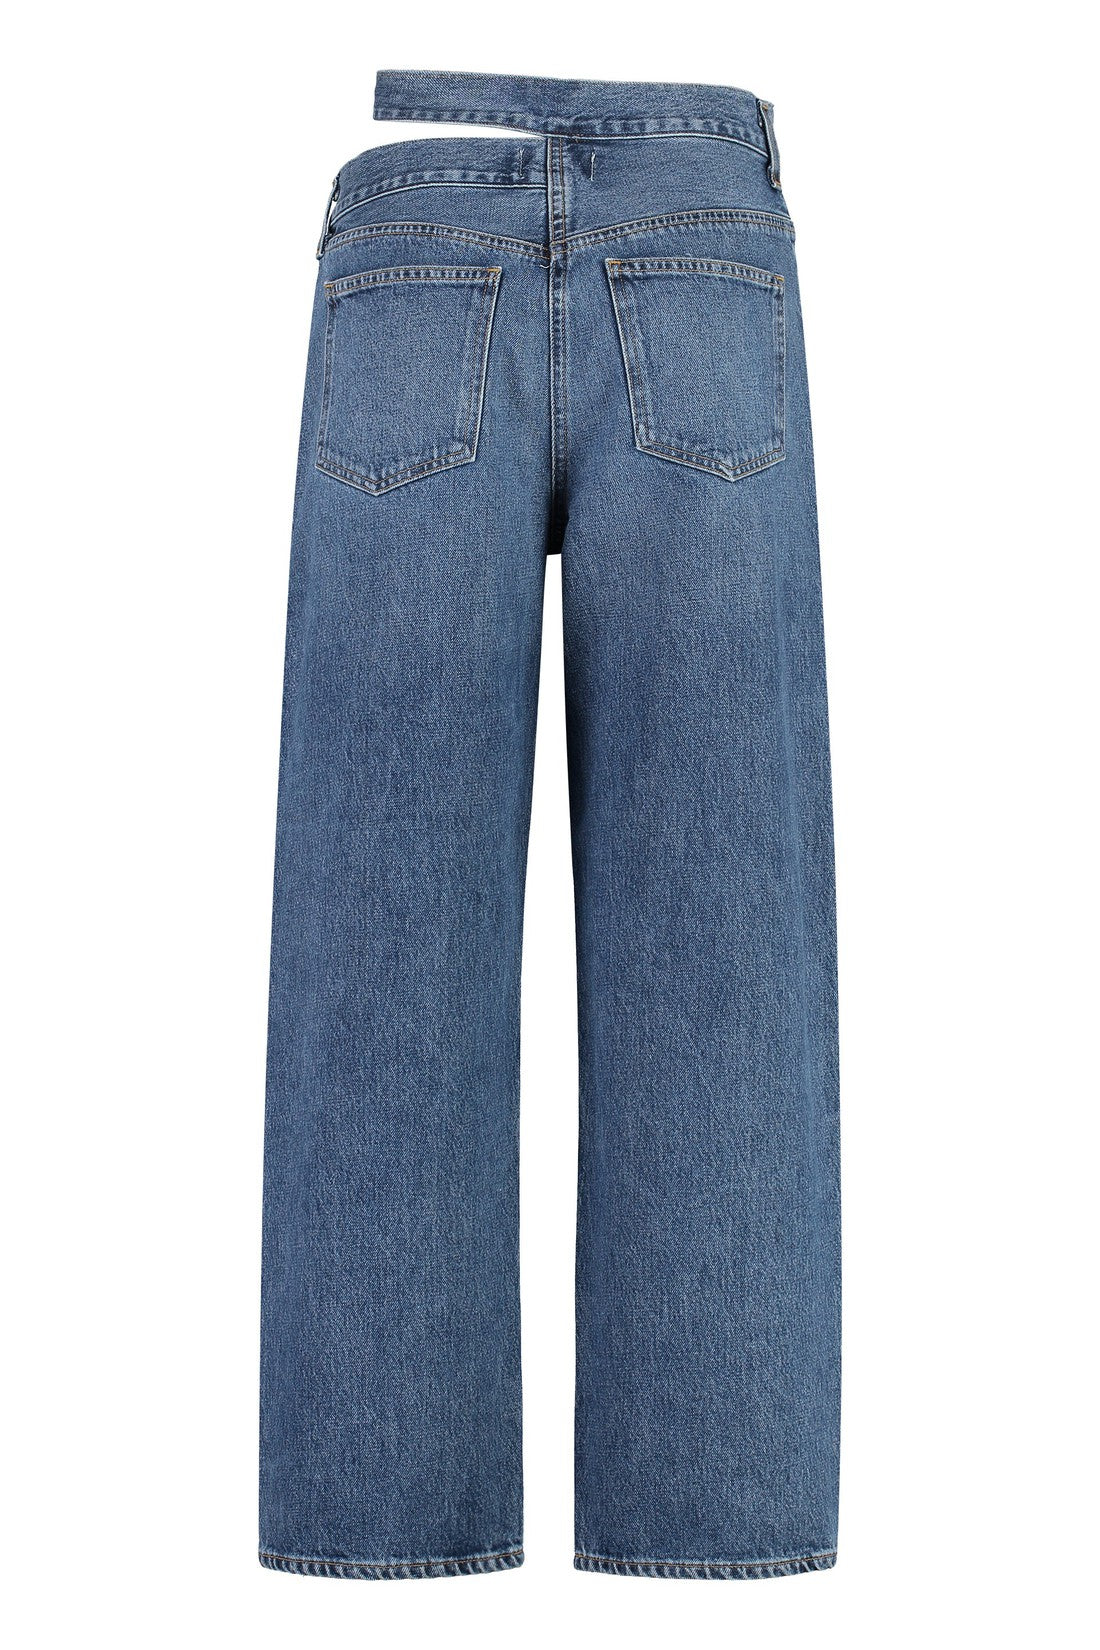 AGOLDE-OUTLET-SALE-Broken Waistband jeans-ARCHIVIST